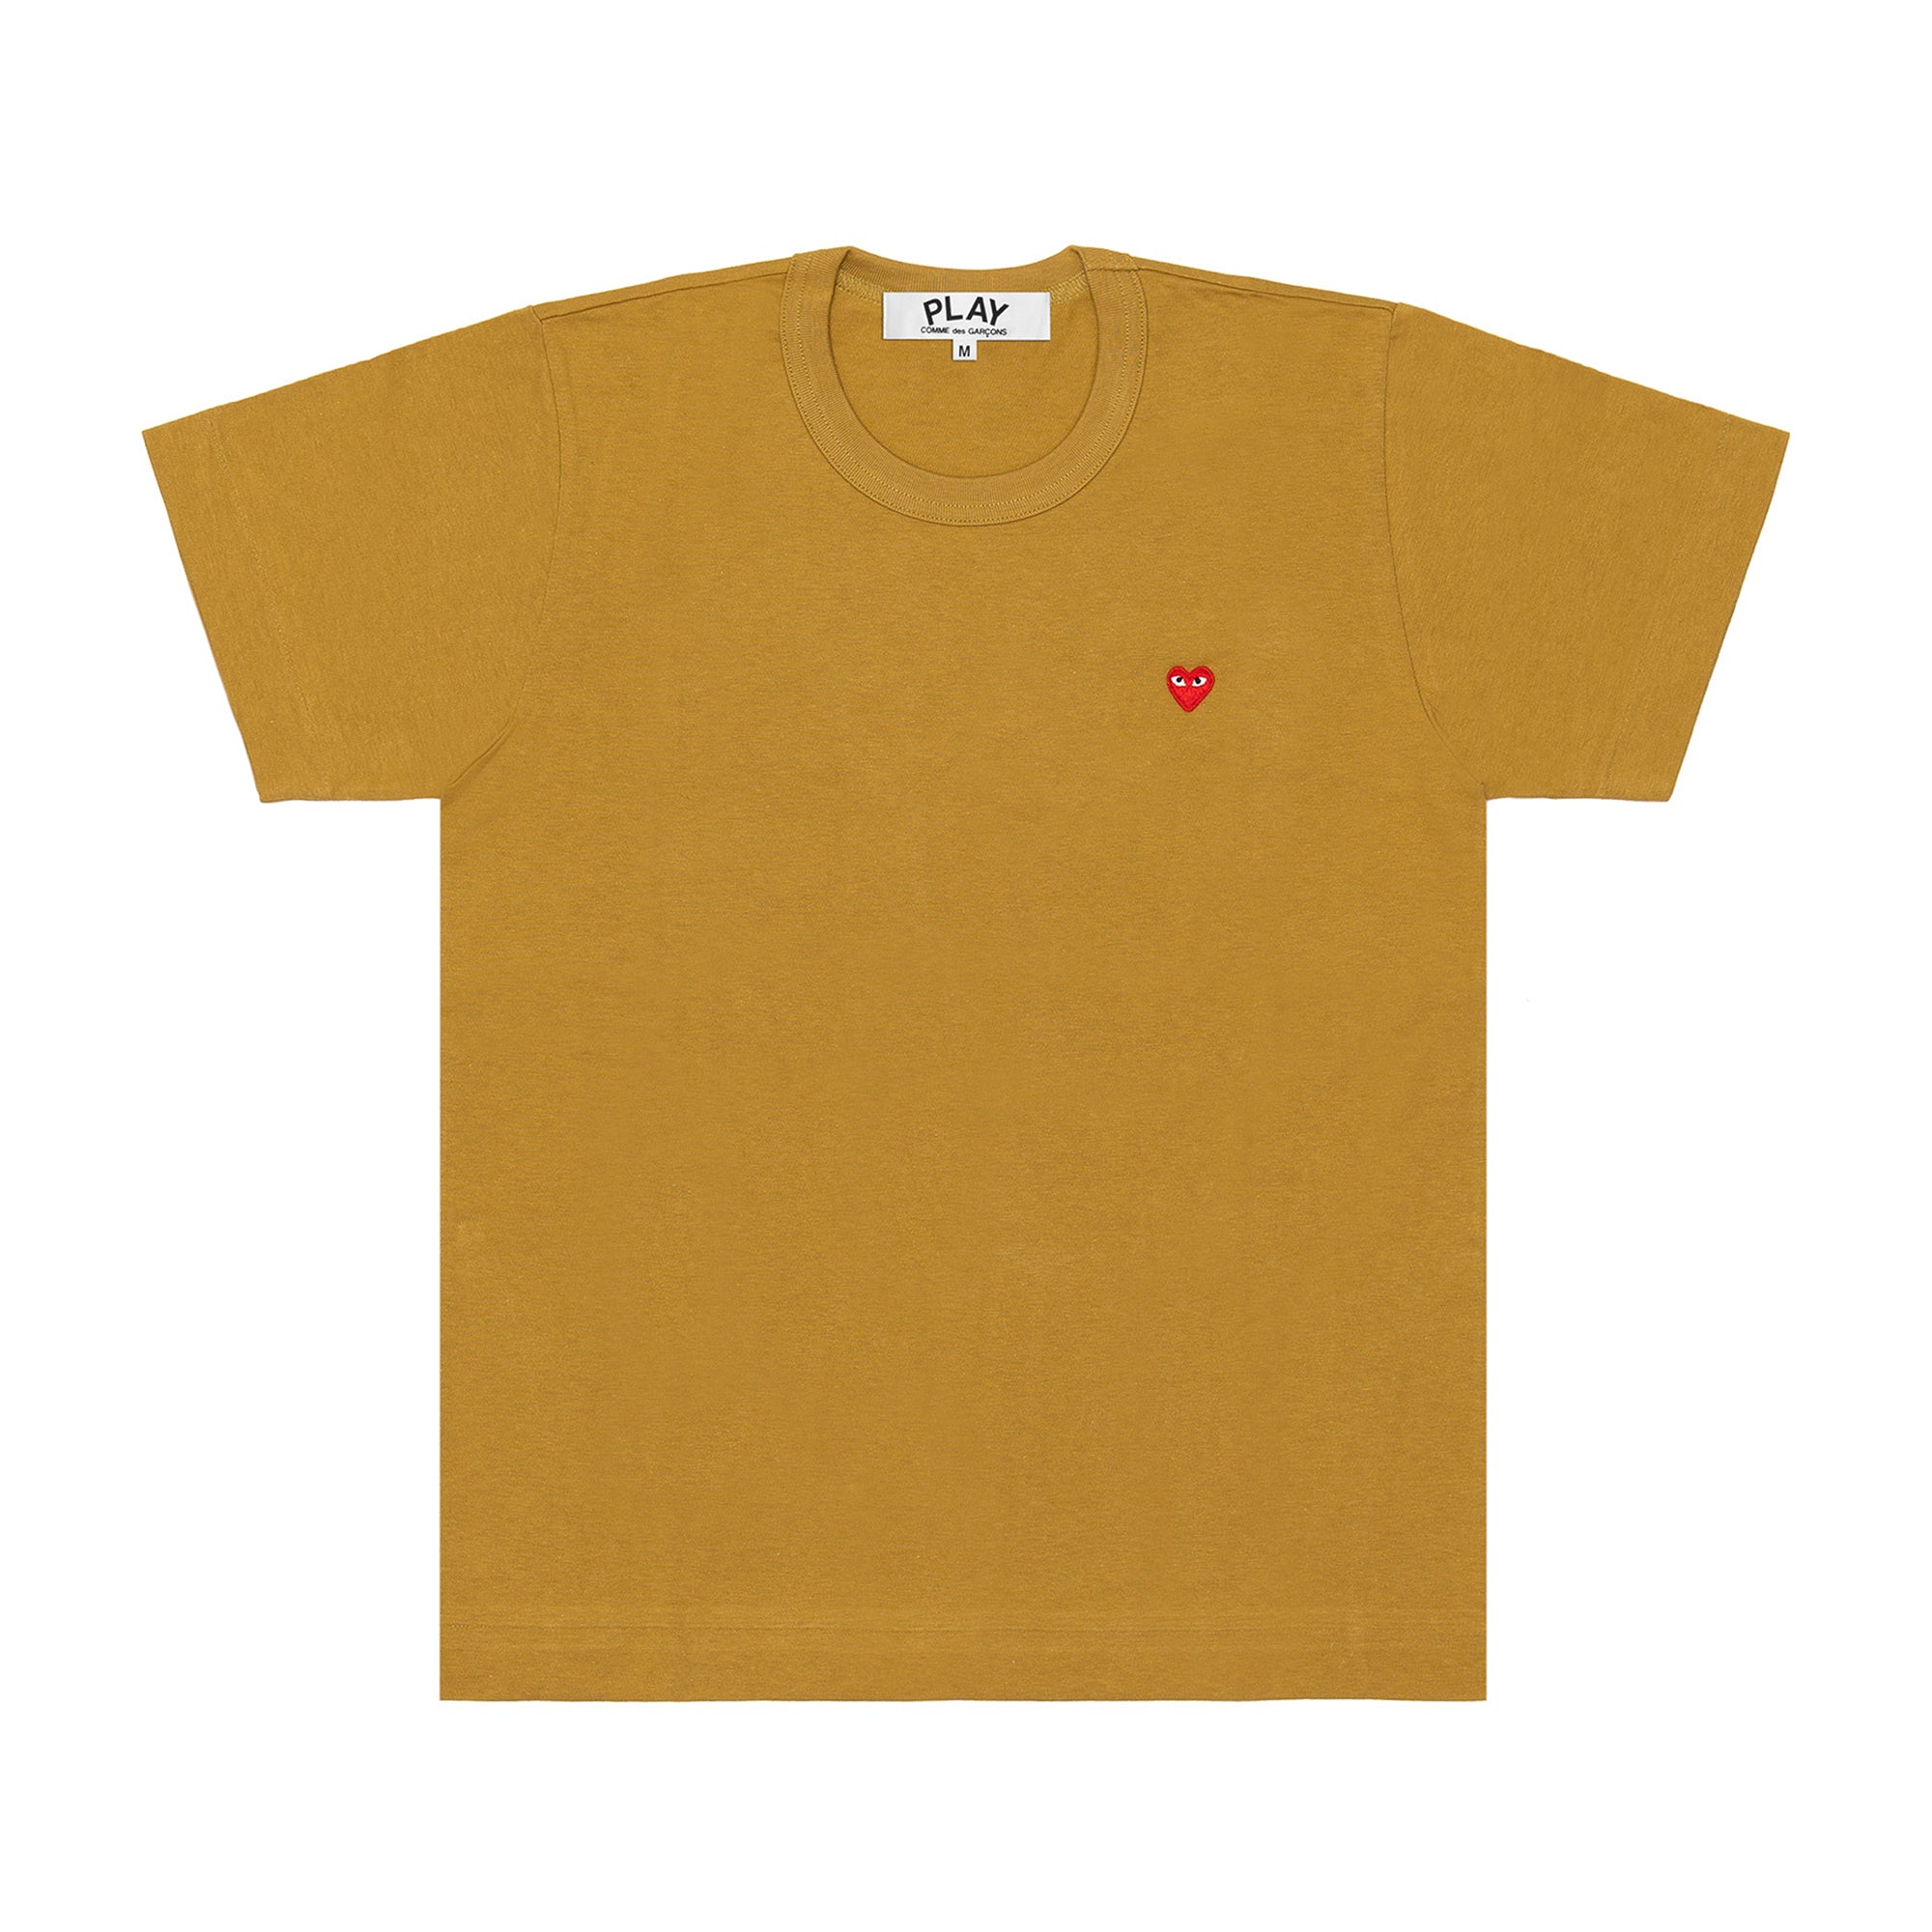 Play - Small Heart T-Shirt - (Mustard) view 1